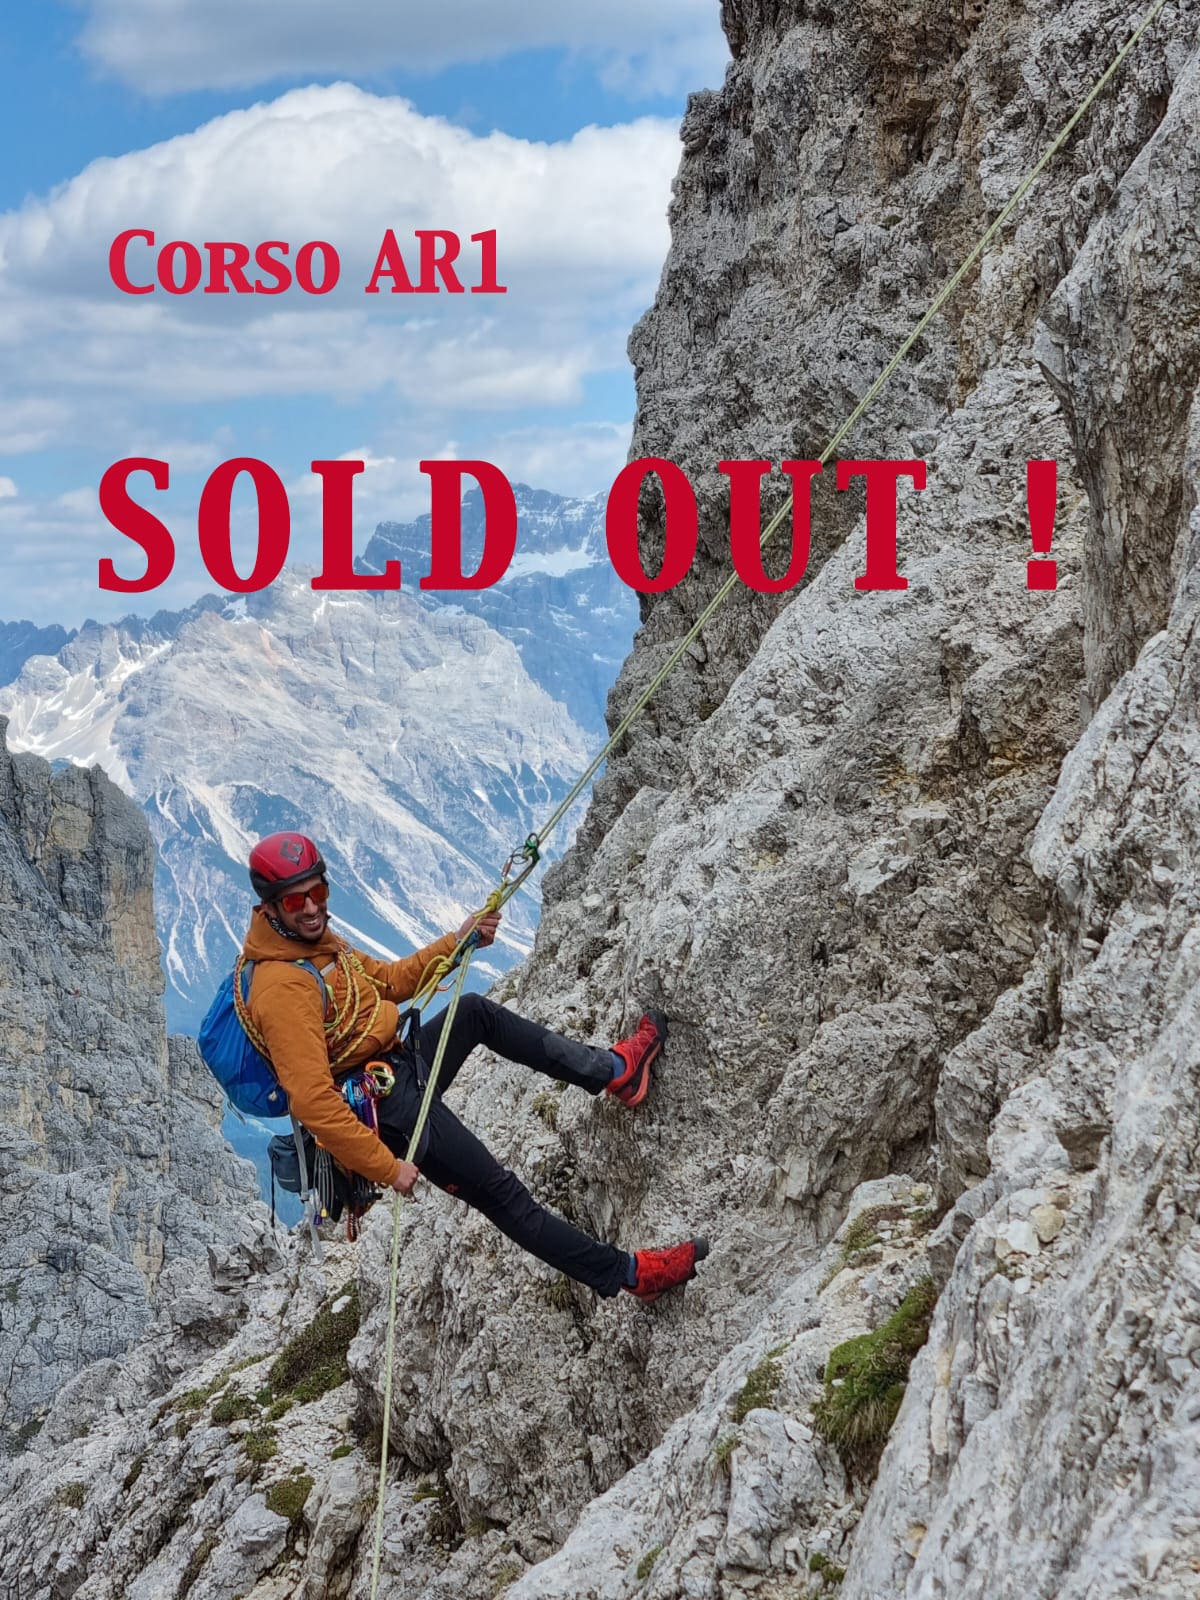 comici-corso-AR1-sold out